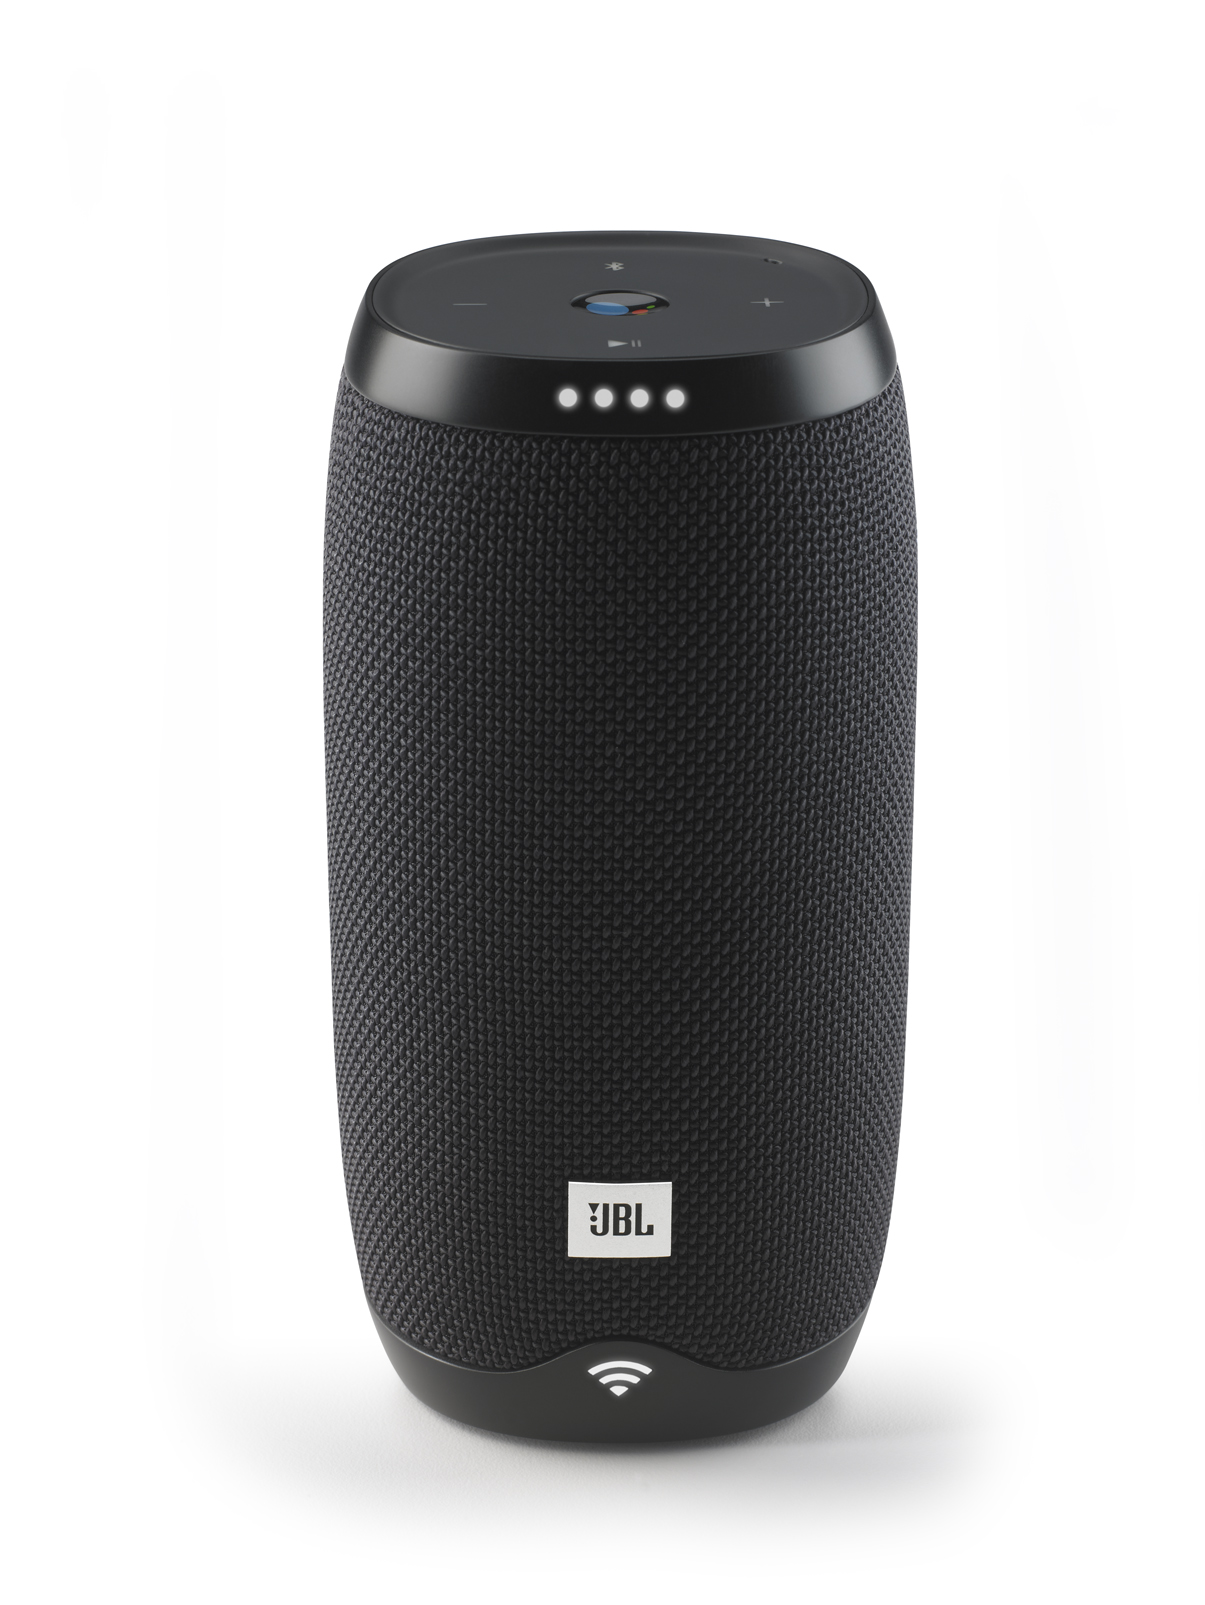 JBLLINK10BLKUK, Voice-activated portable speaker, noir